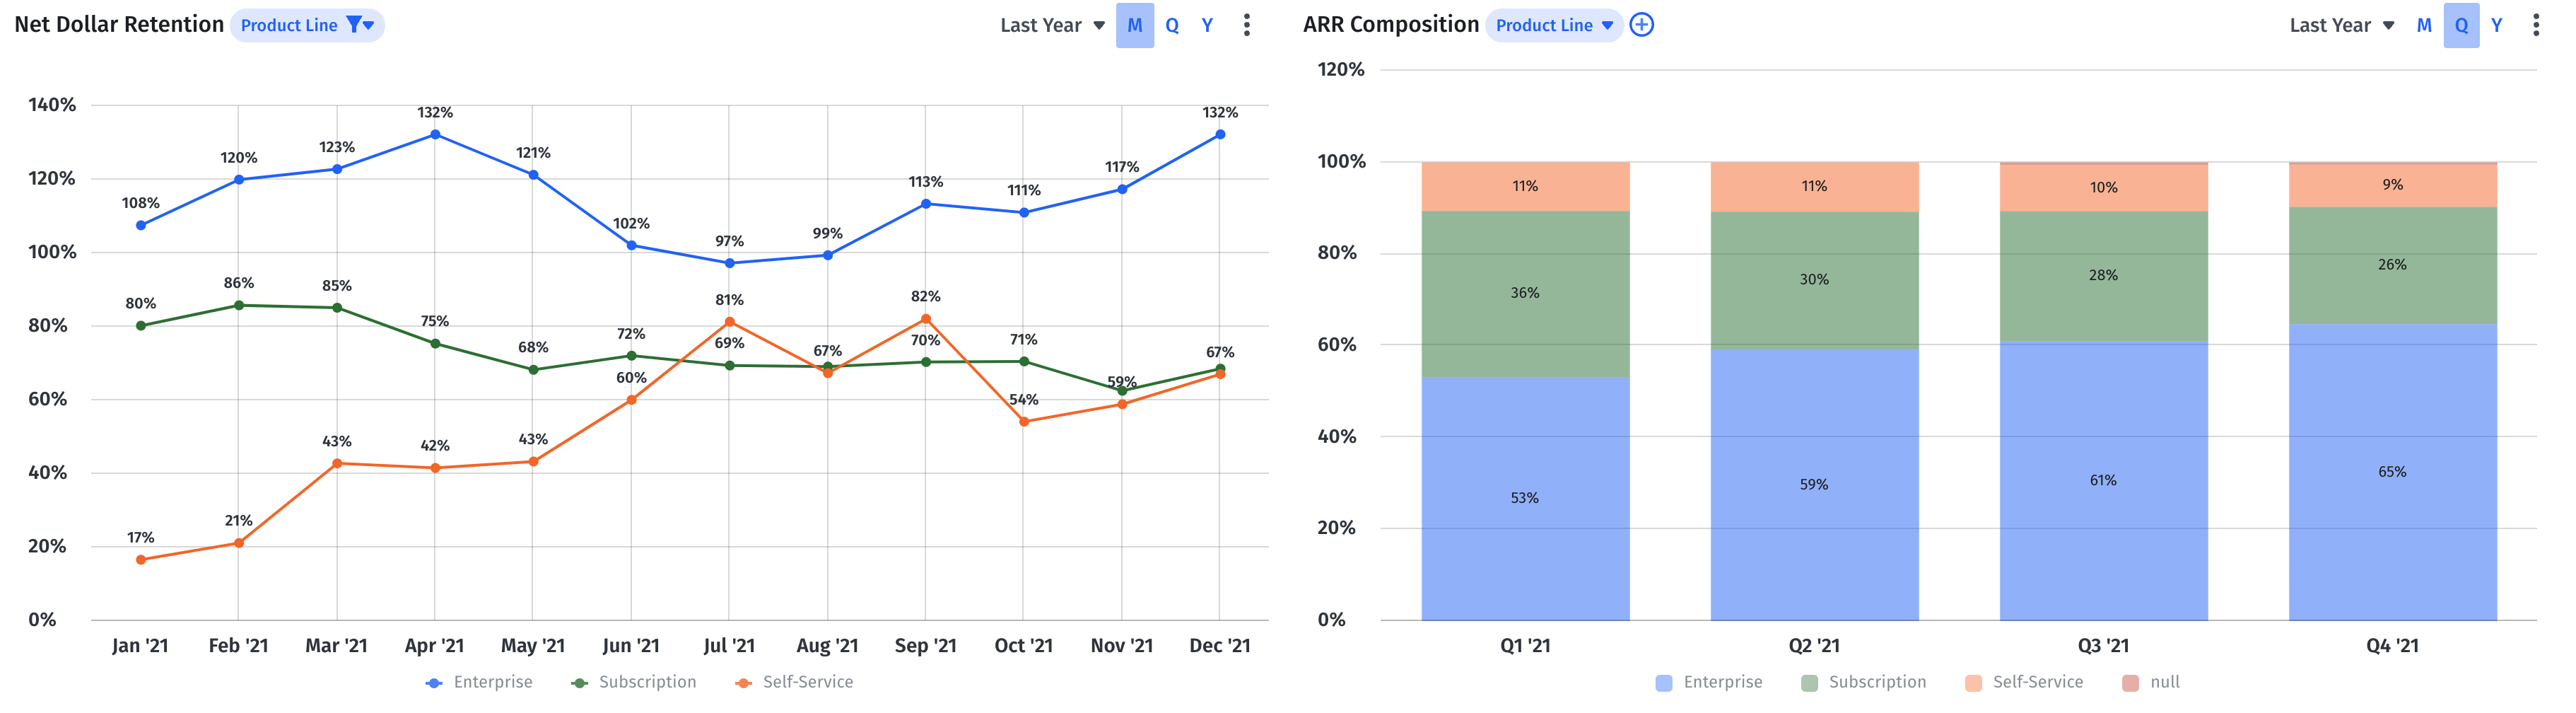 net revenue retention and ARR composition by product line